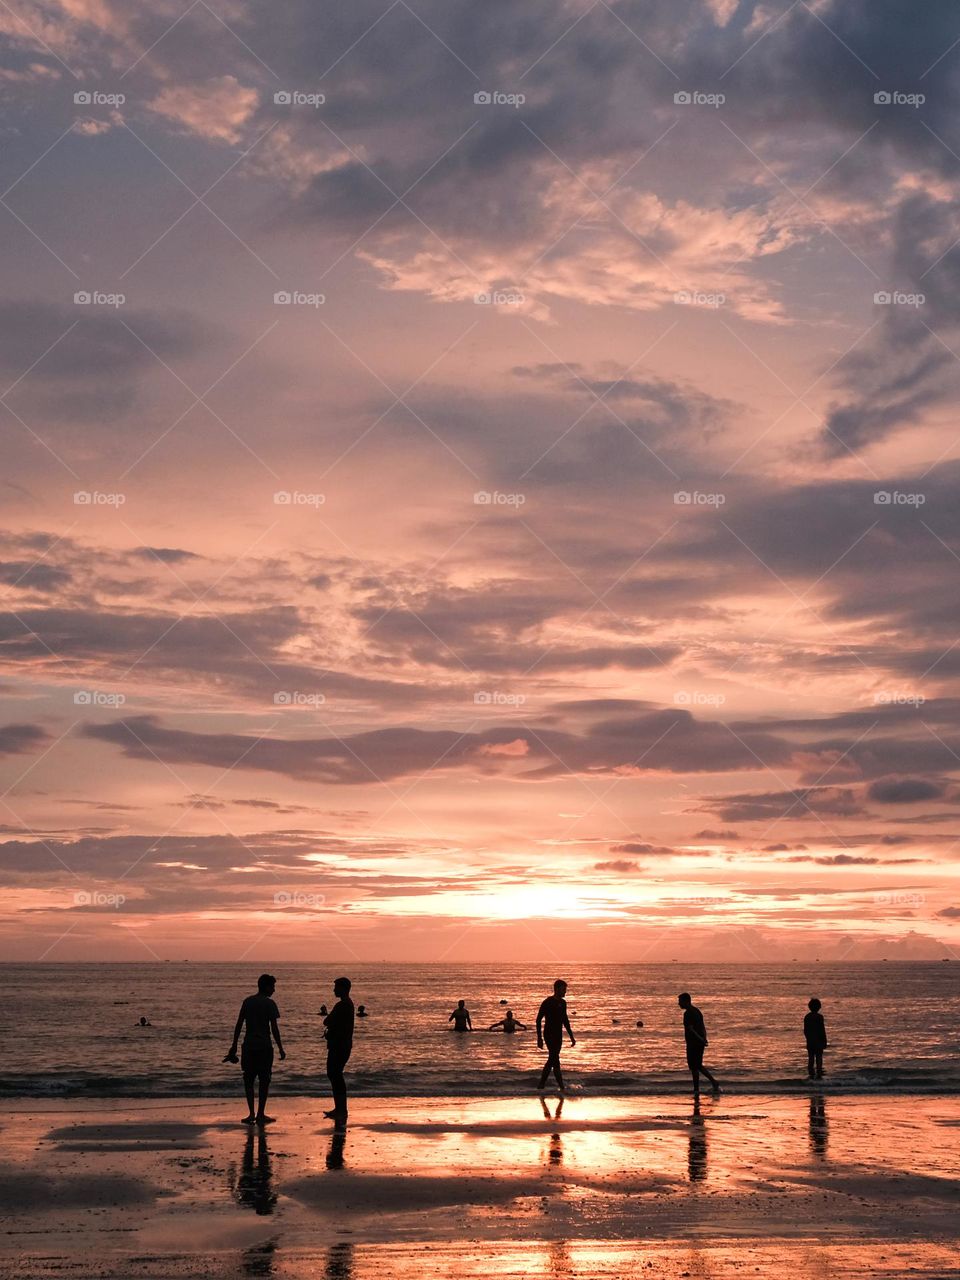 People gathers on the beach enjoying the beautiful sunset in Langkawi, Malaysia